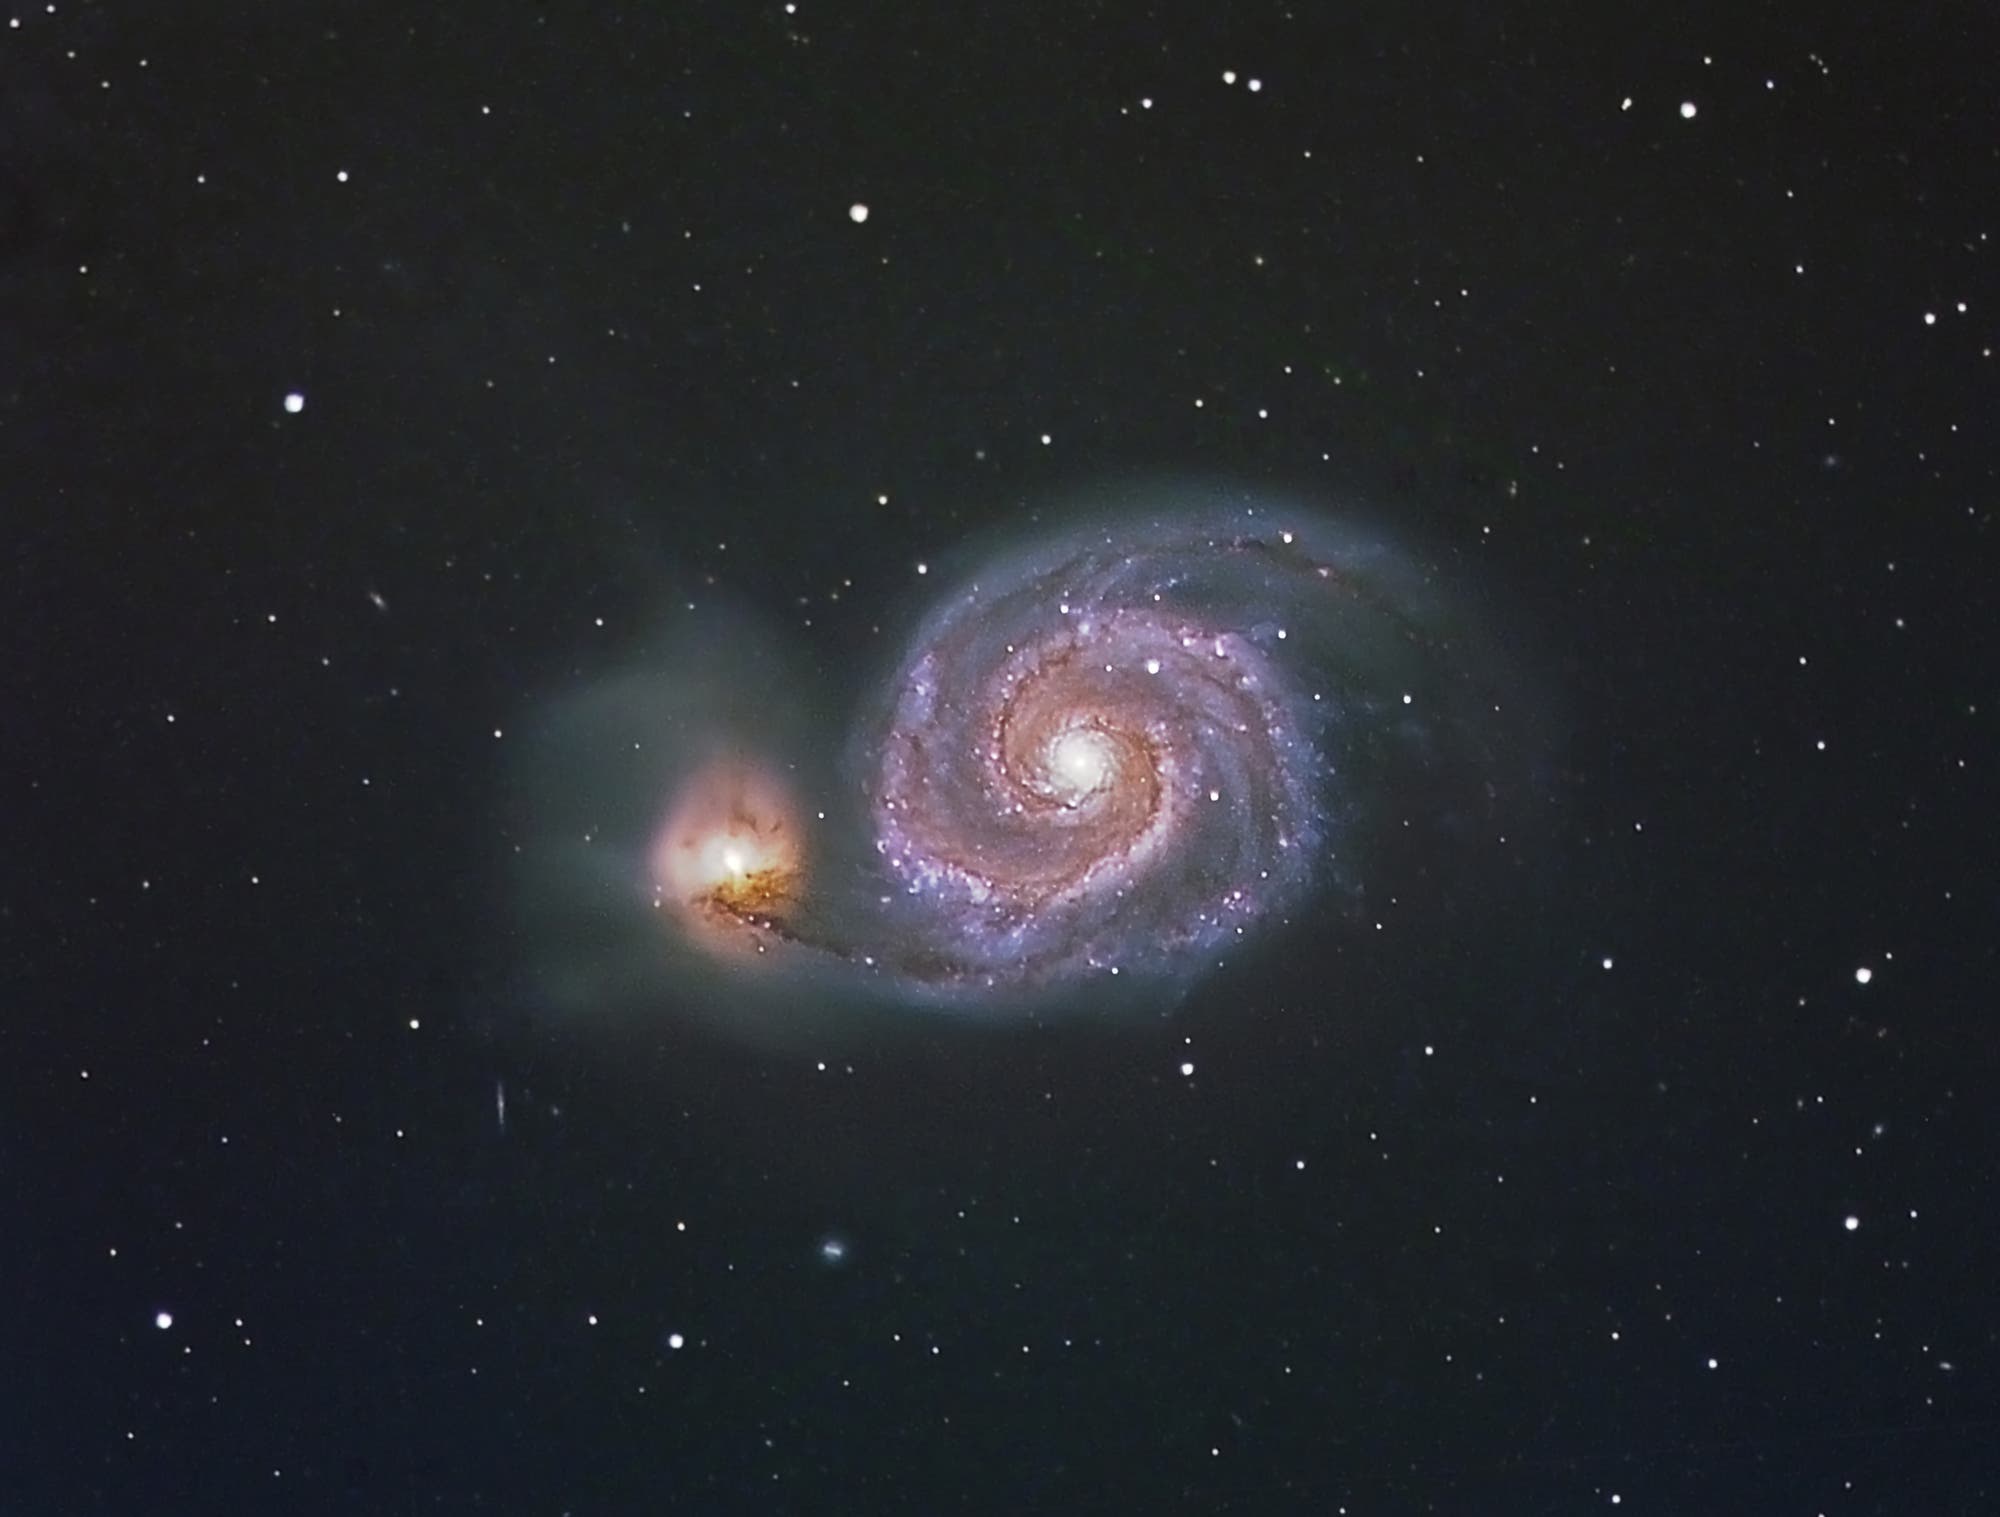 M 51 Whirlpoolgalaxie